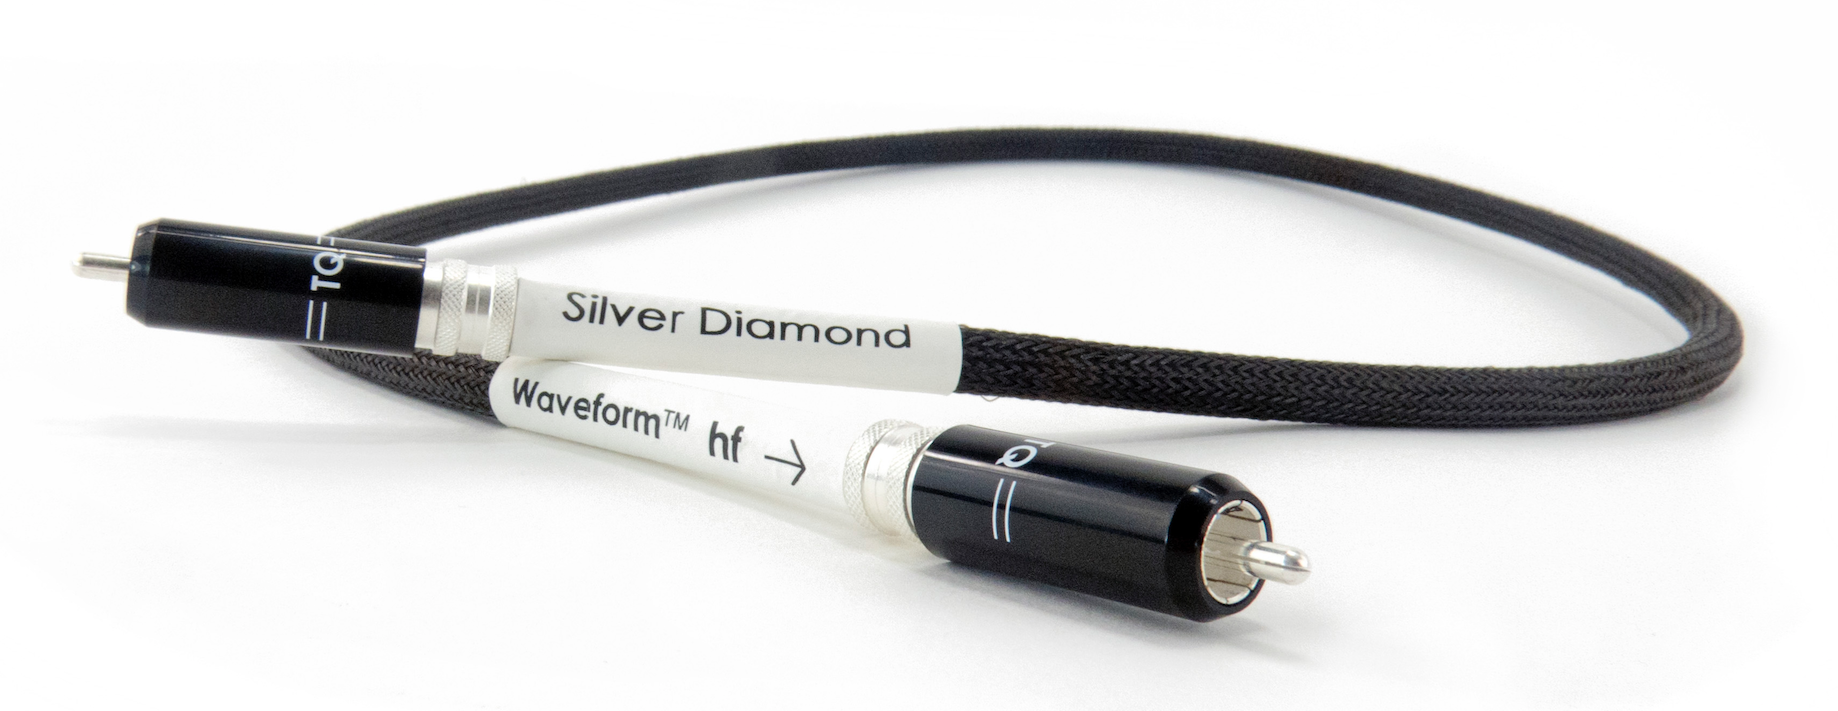 Tellurium Q’s Silver Diamond Waveform hf Digital RCA